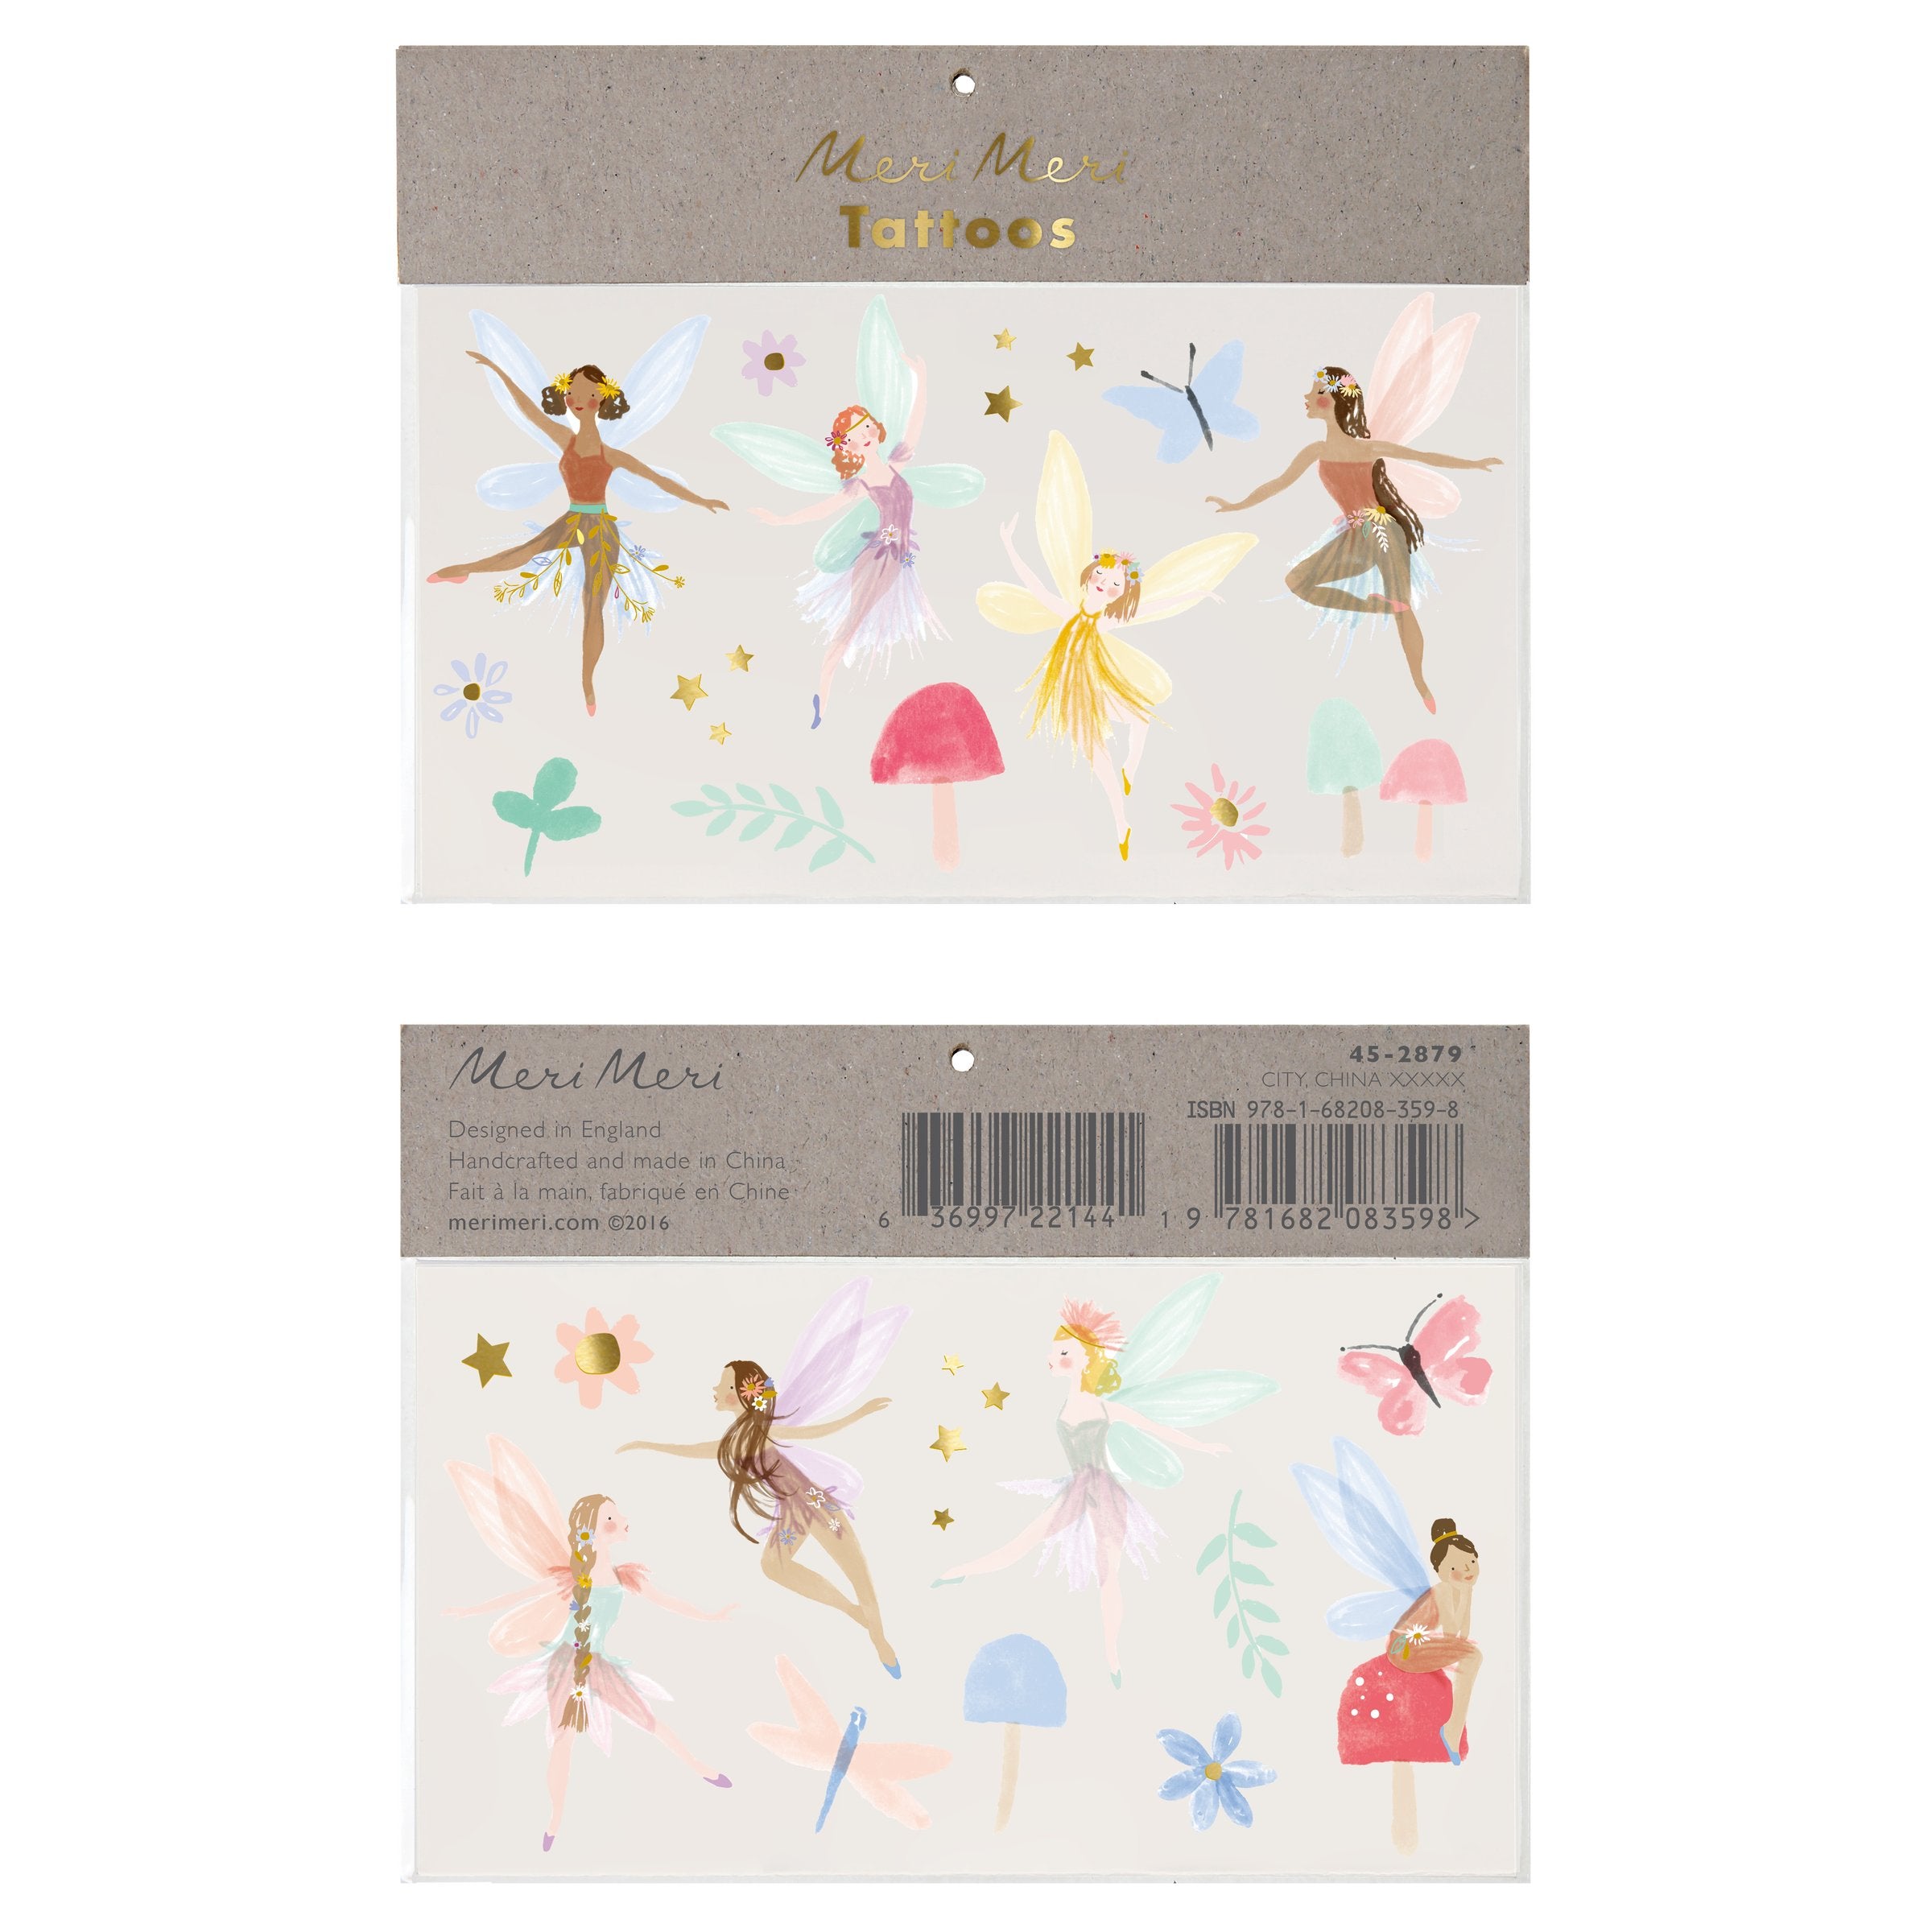 48 Bulk Jumbo Fairies / Mermaids Coloring & Activity Book - at 